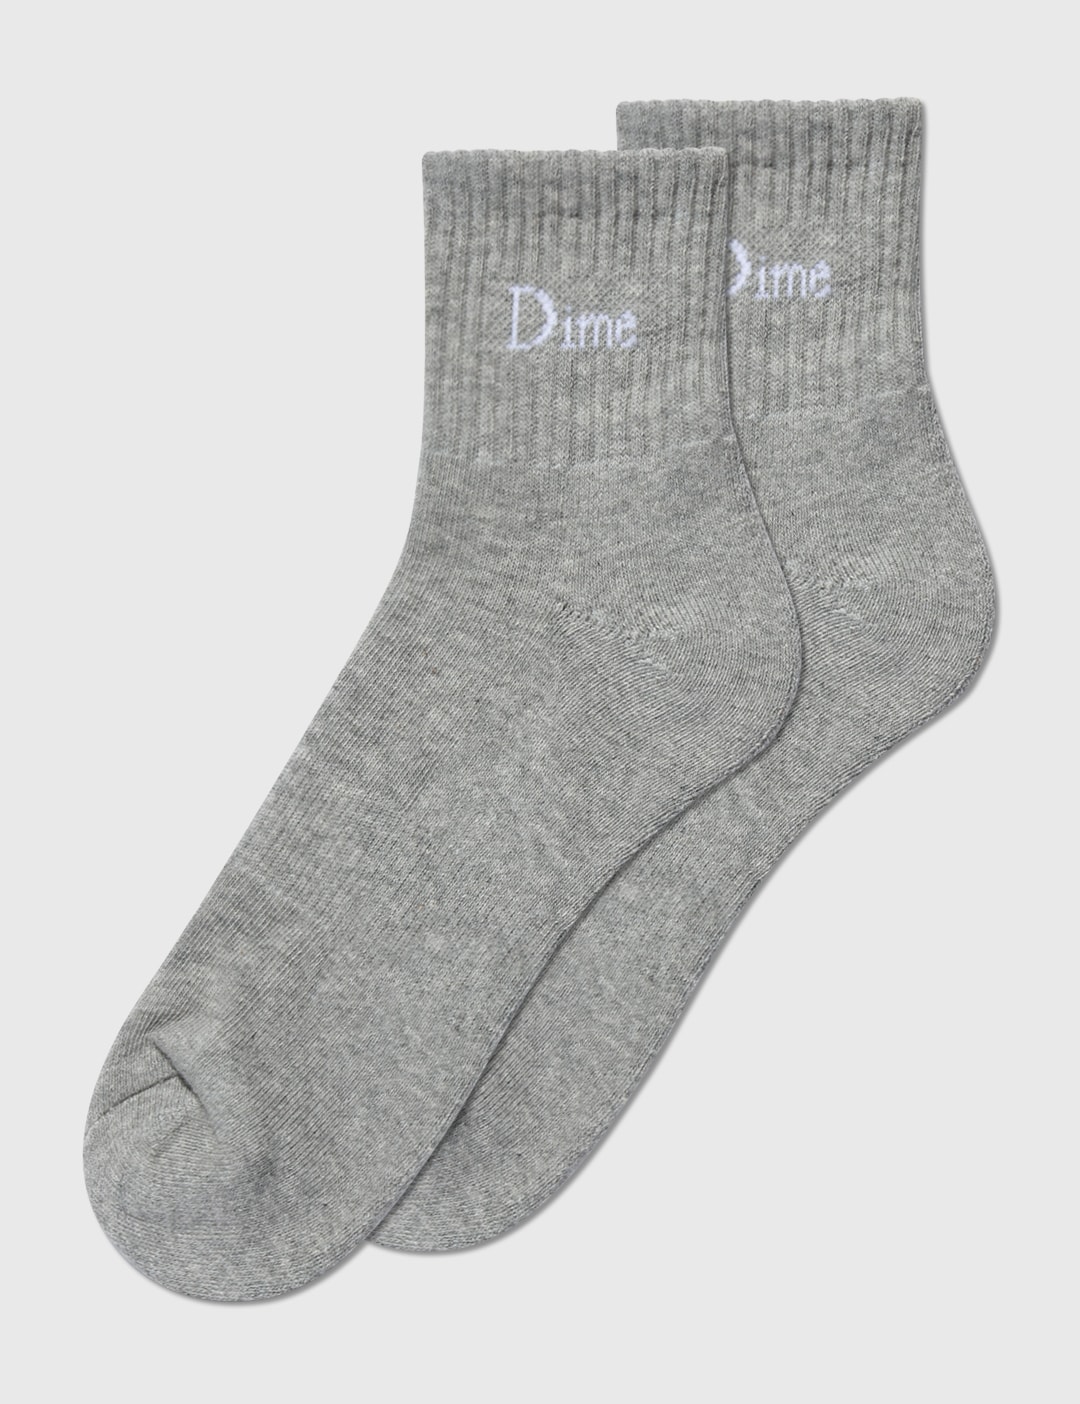 Dime Classic Socks Placeholder Image